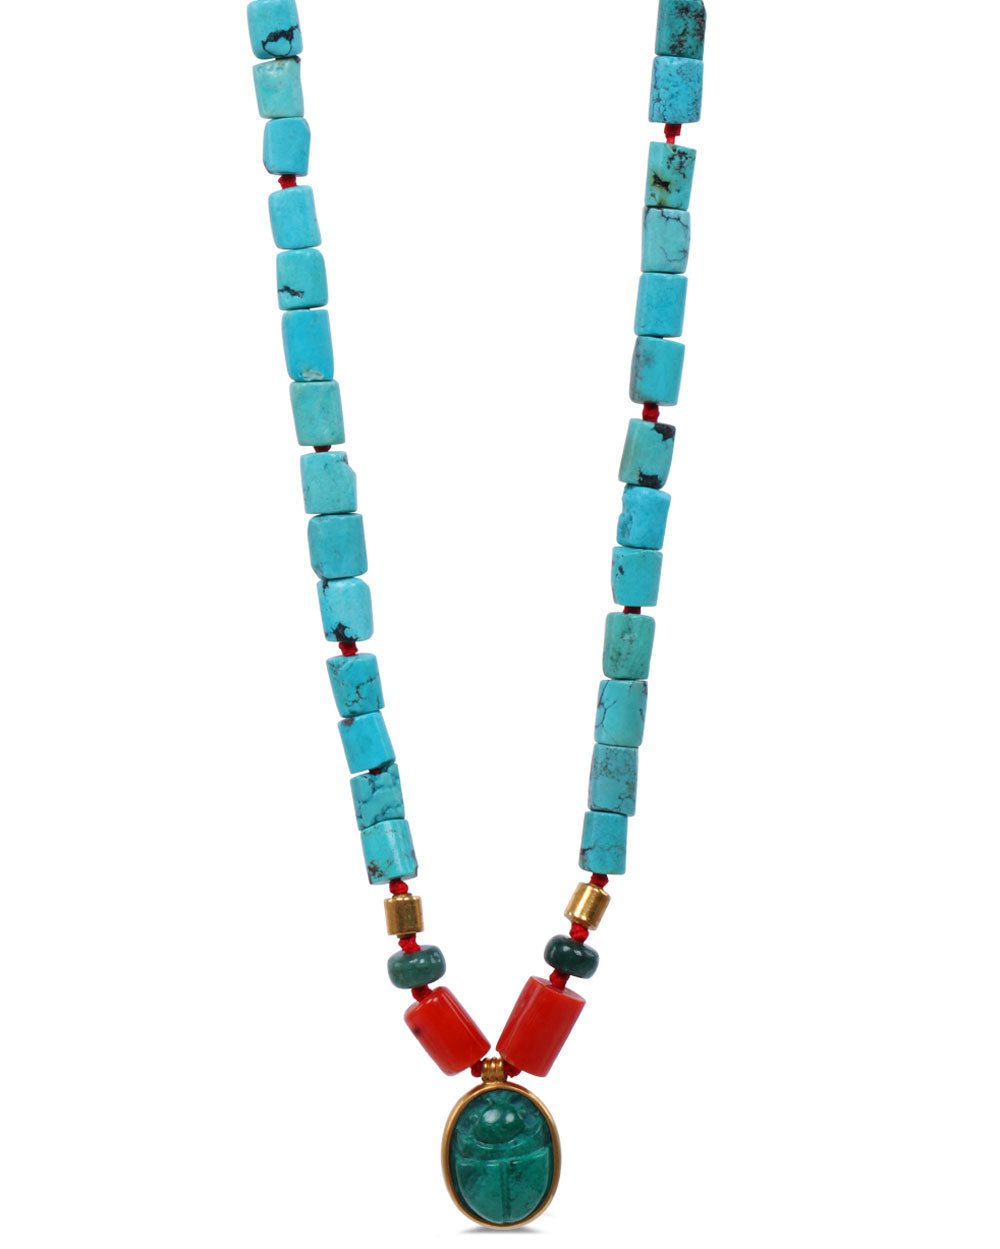 Malachite and Turquoise Beaded Necklace